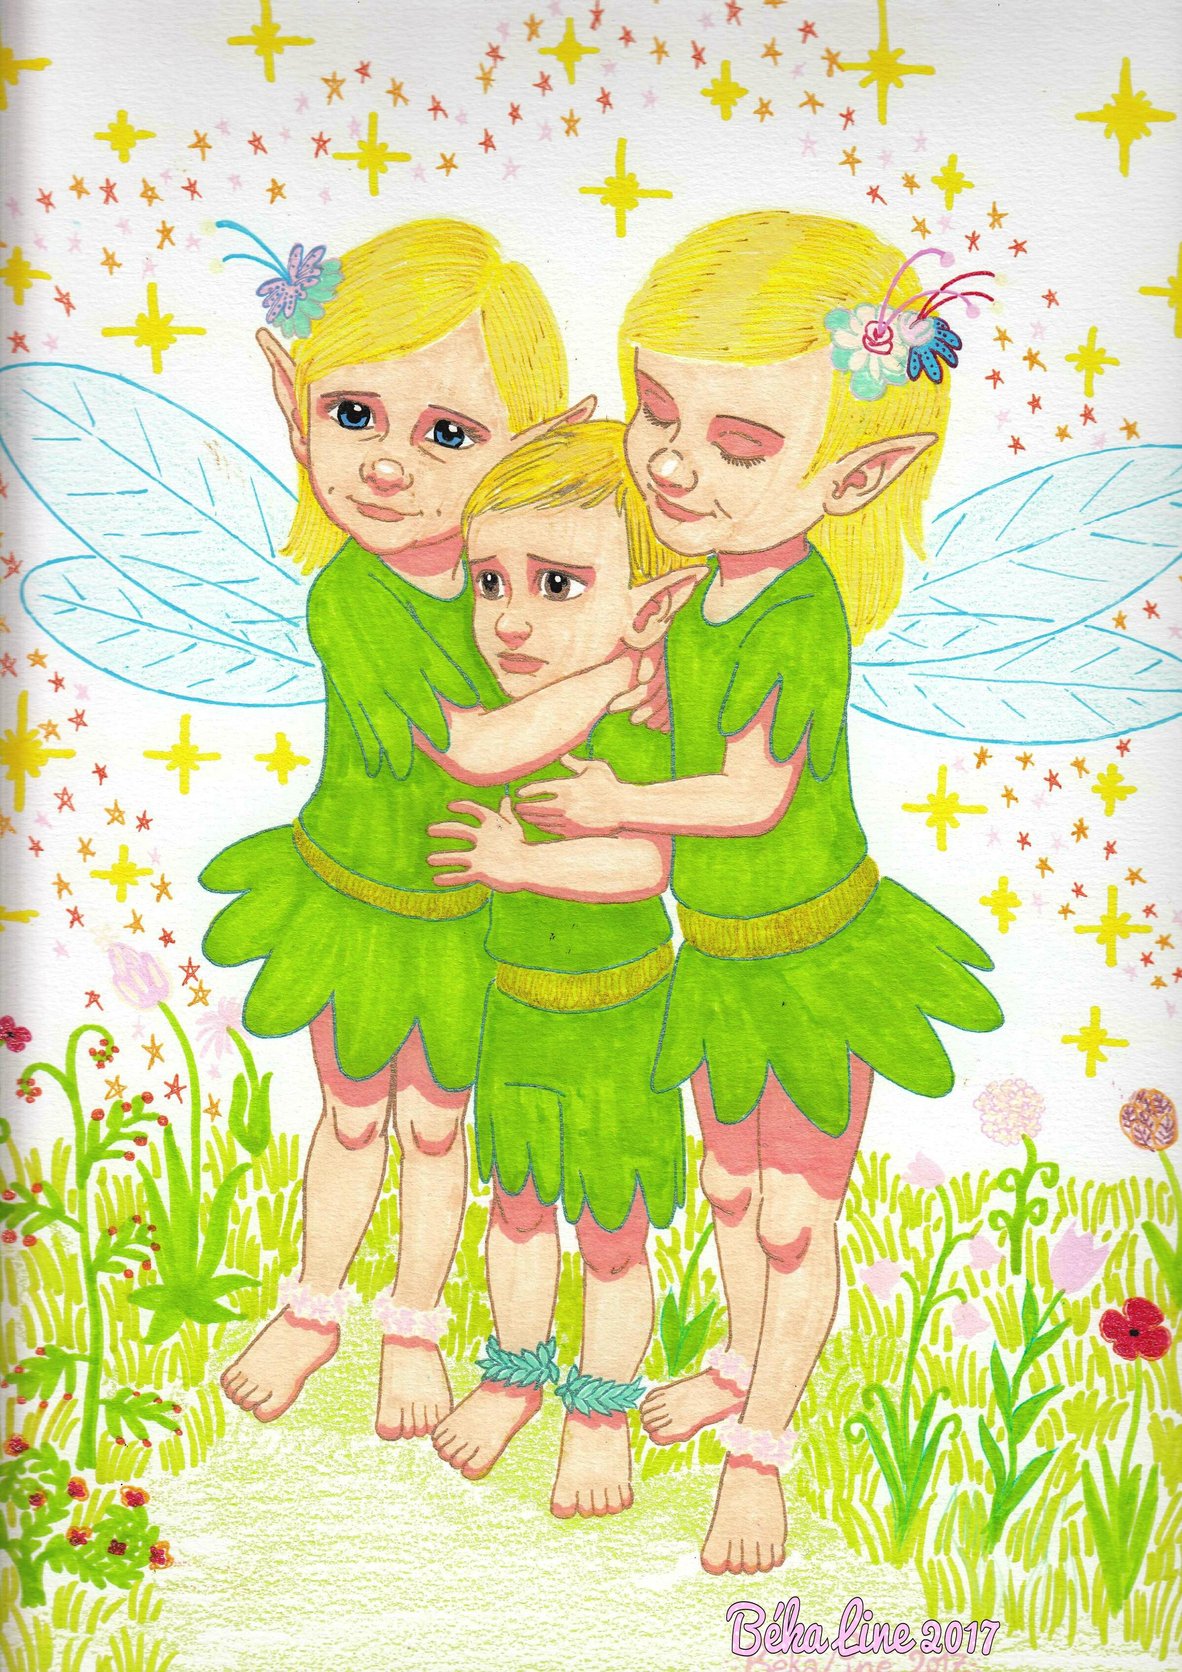 3 little fairies